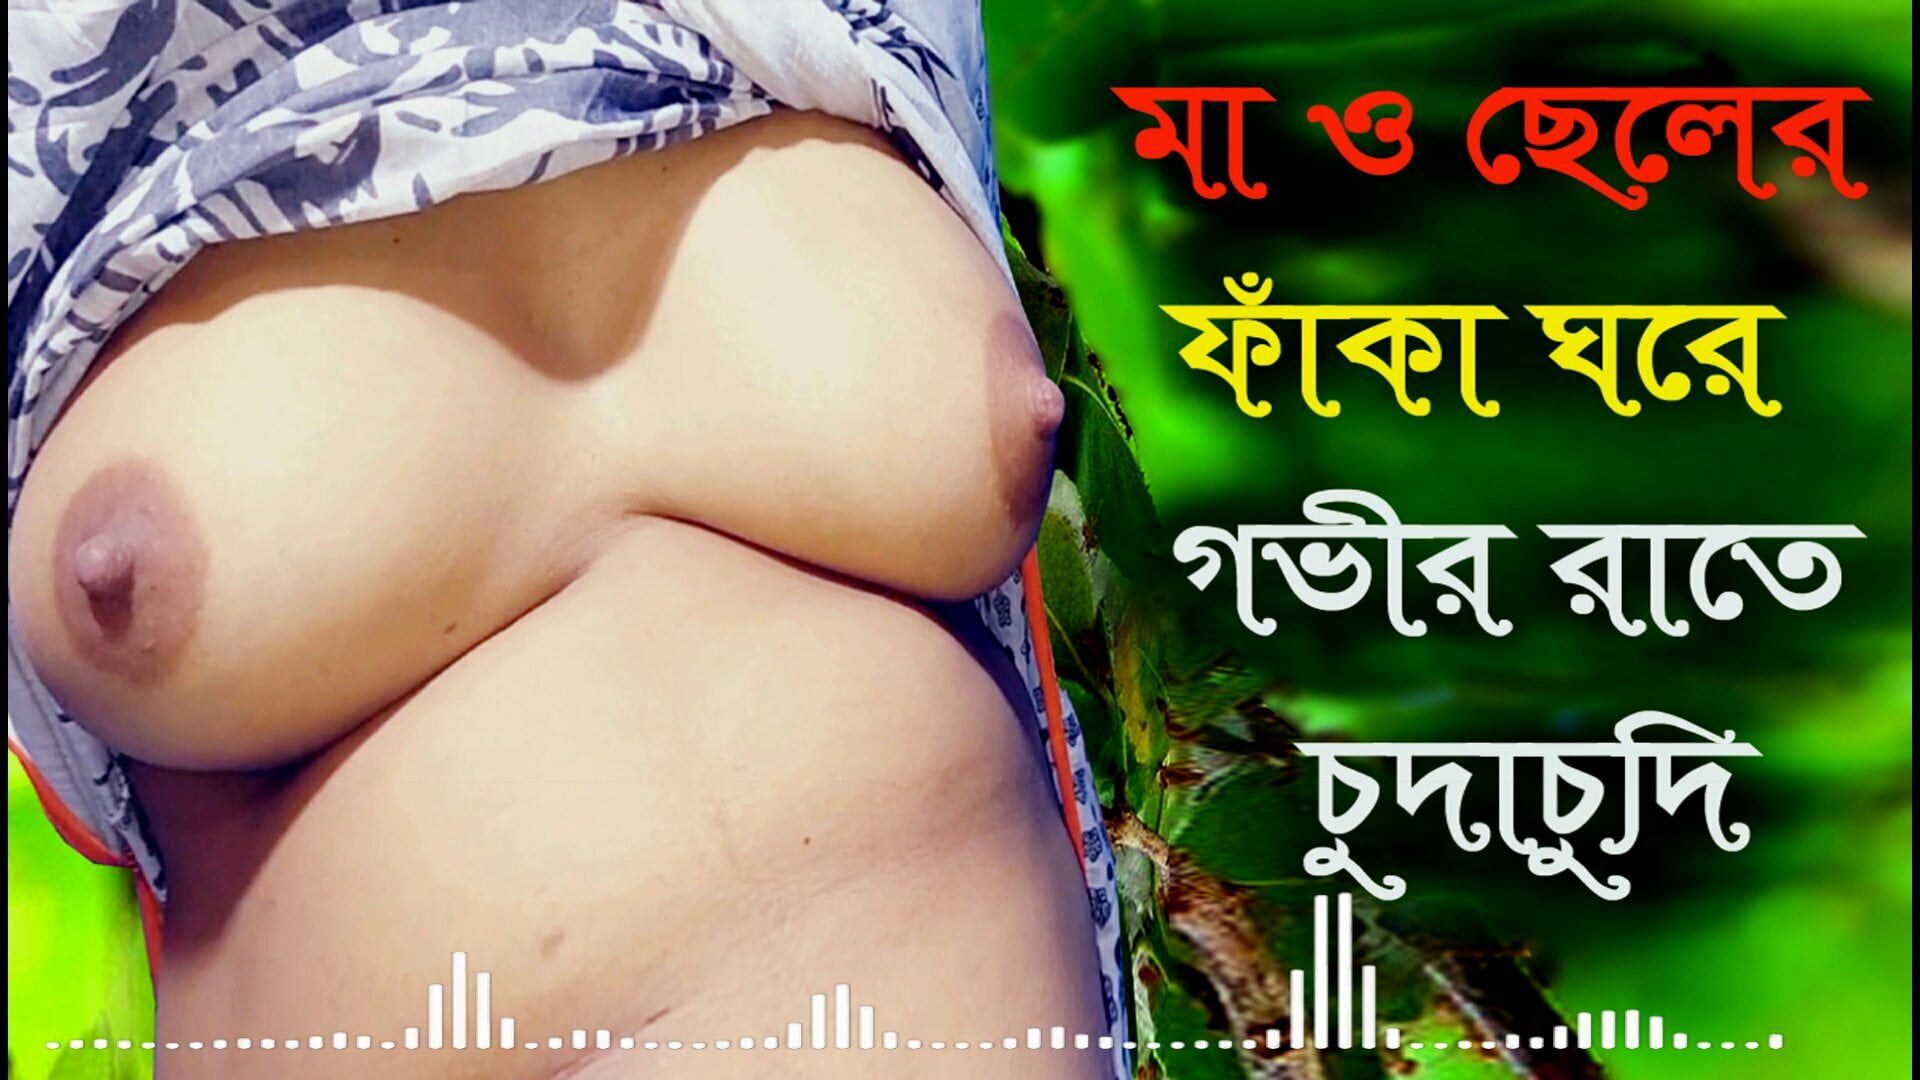 Bangla new sex story